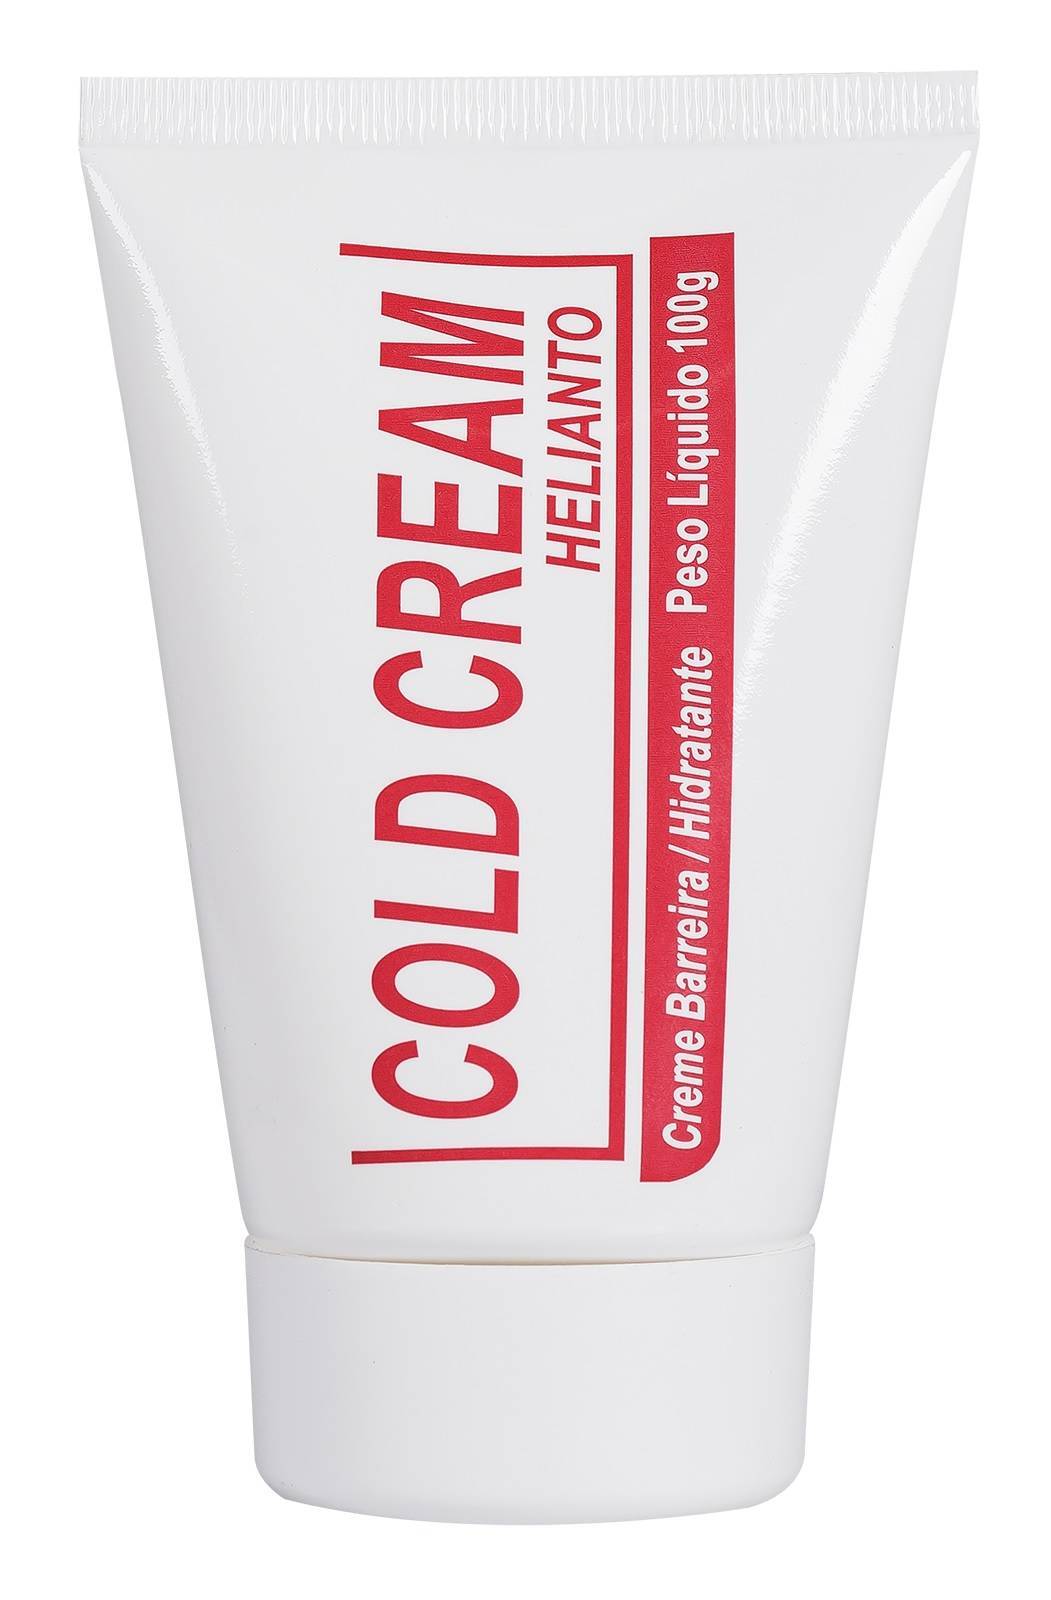 Creme Barreira Cold Cream 200g